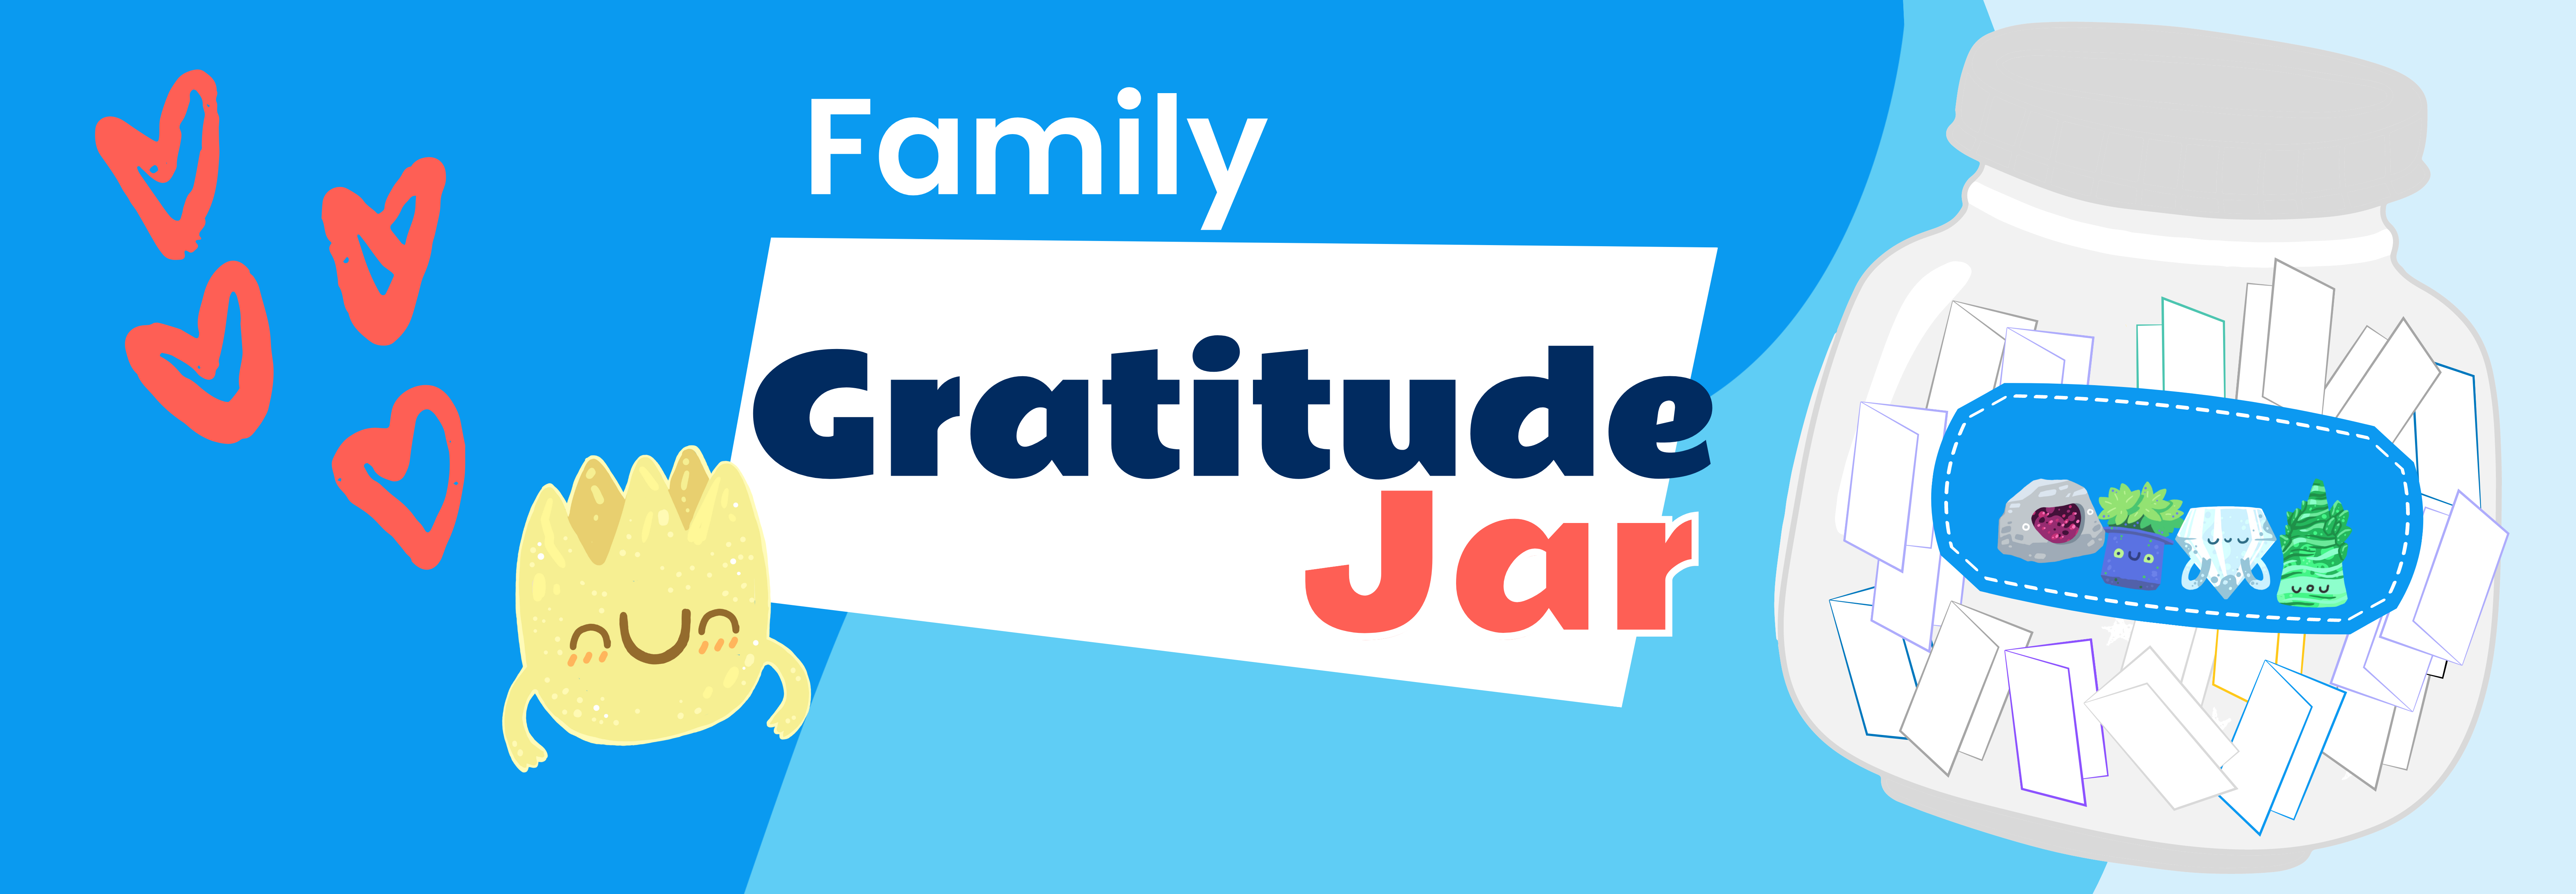 gratitude jar banner (3)